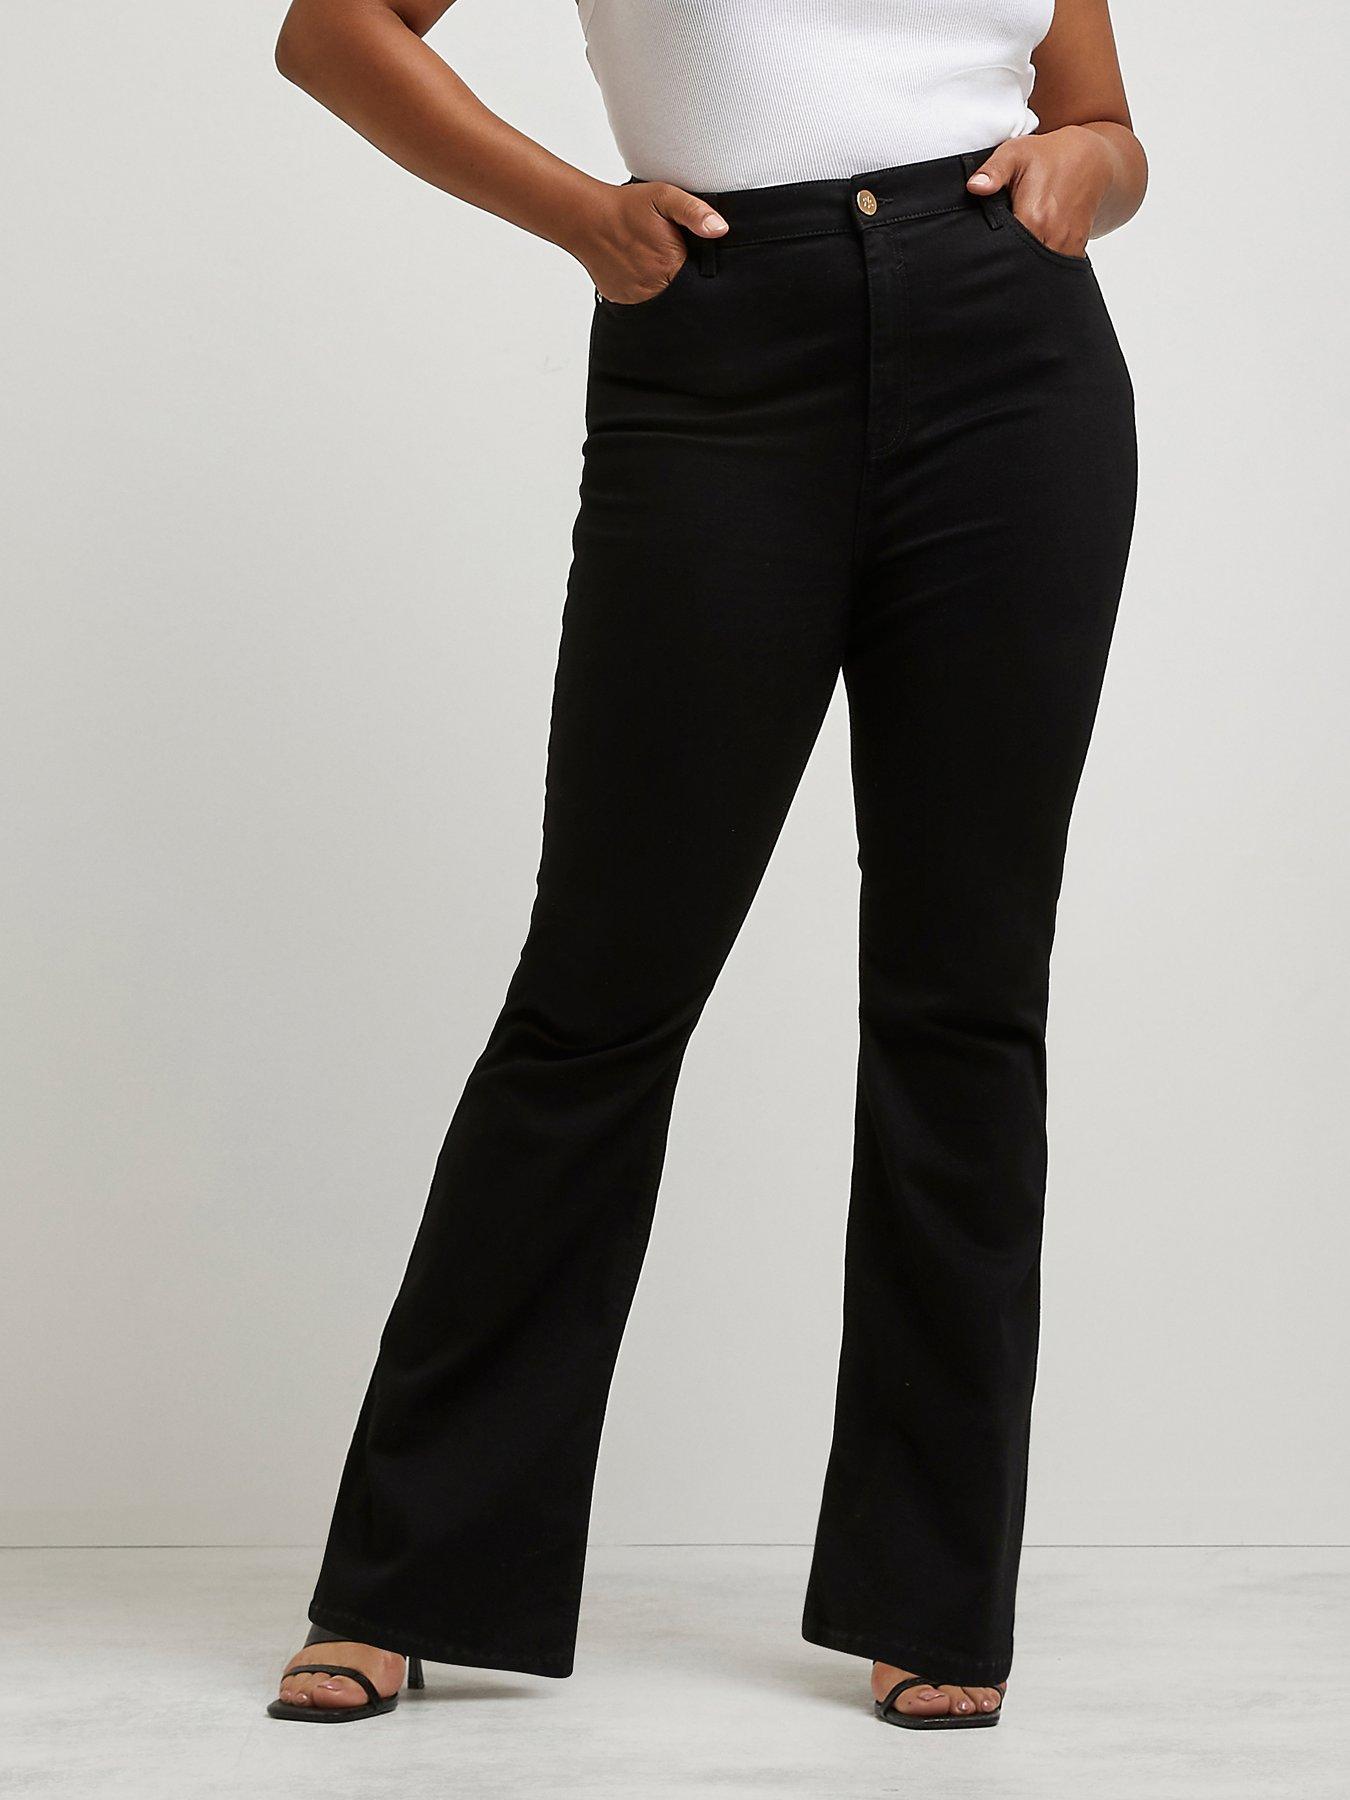 Ladies New Plain Black Trousers Slight Flare Size 10,12,14,16,18,20,22 Girls 